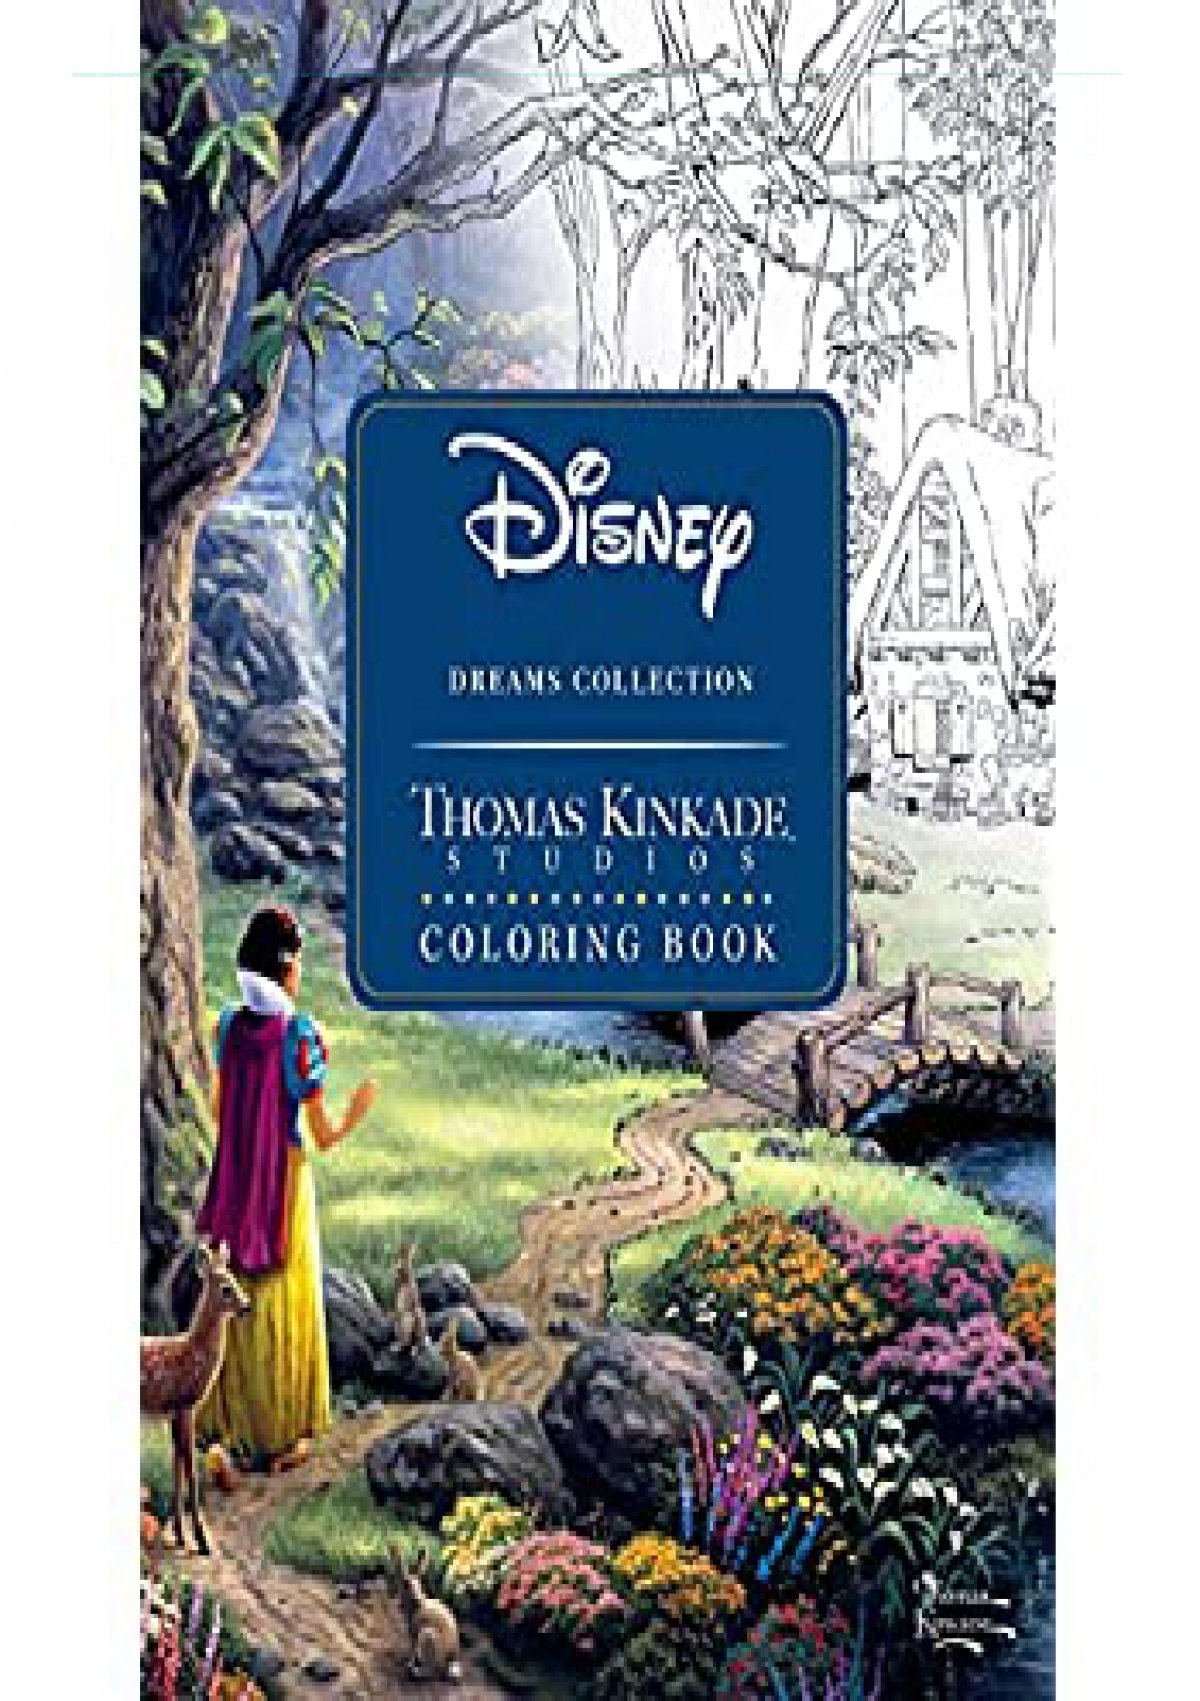 Download Pdf Disney Dreams Collection Thomas Kinkade Studios Coloring Book Full